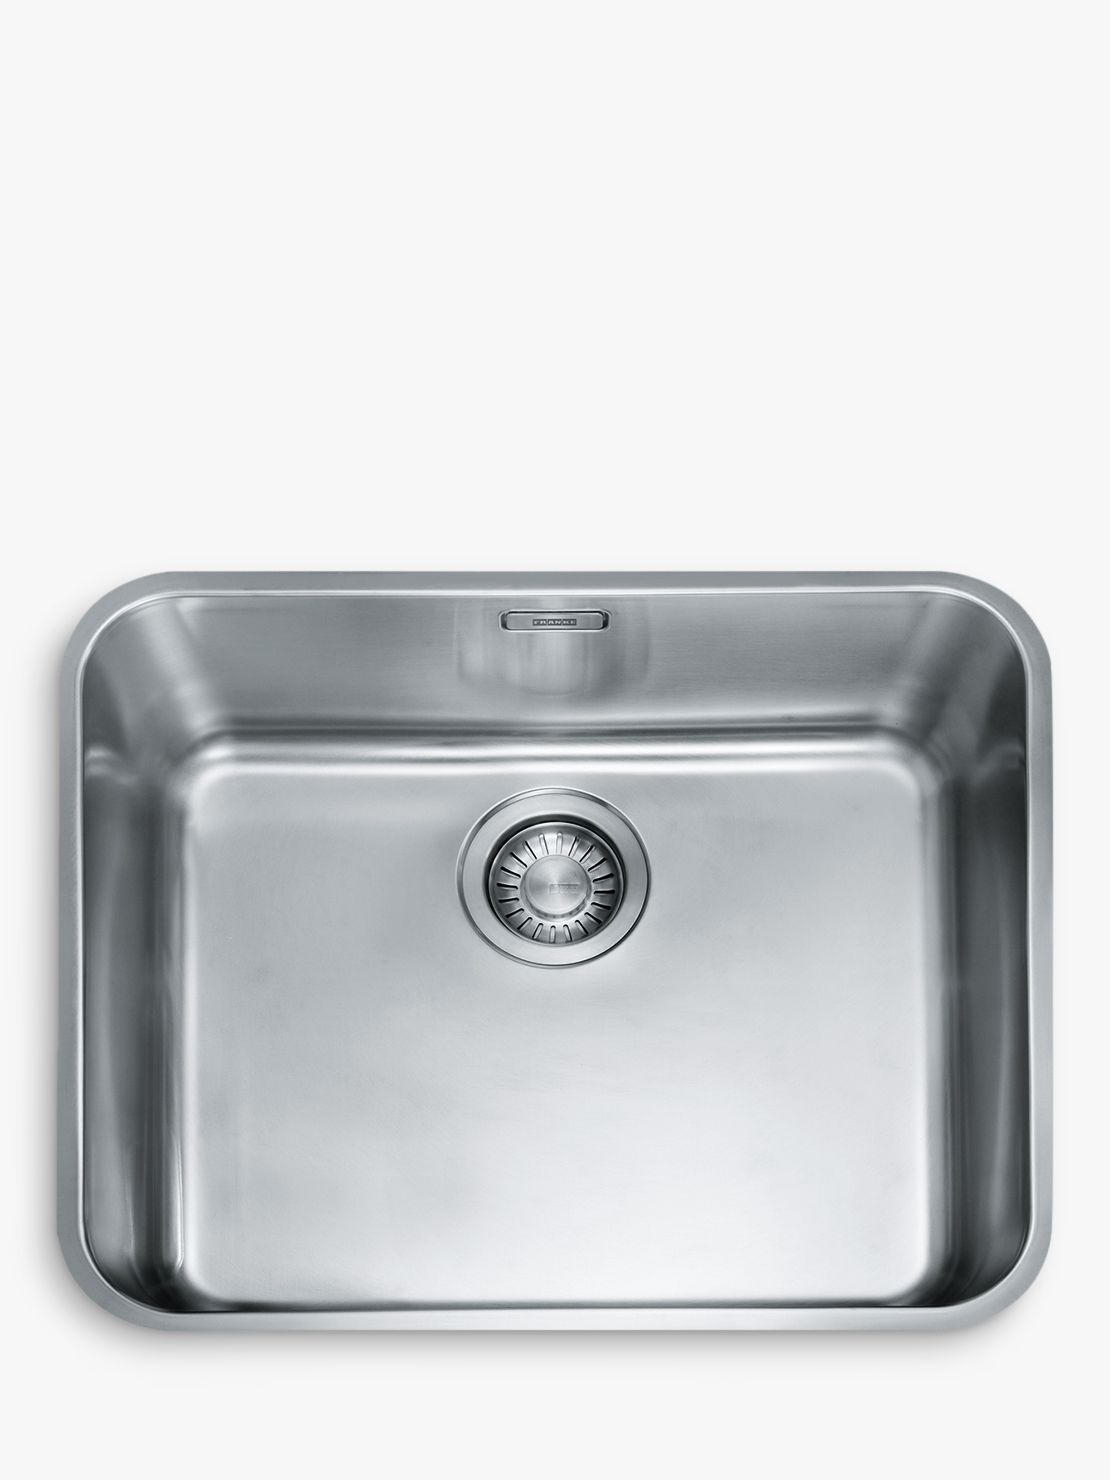 Franke Largo Lax 110 50 41 Undermounted Single Bowl Kitchen Sink Stainless Steel